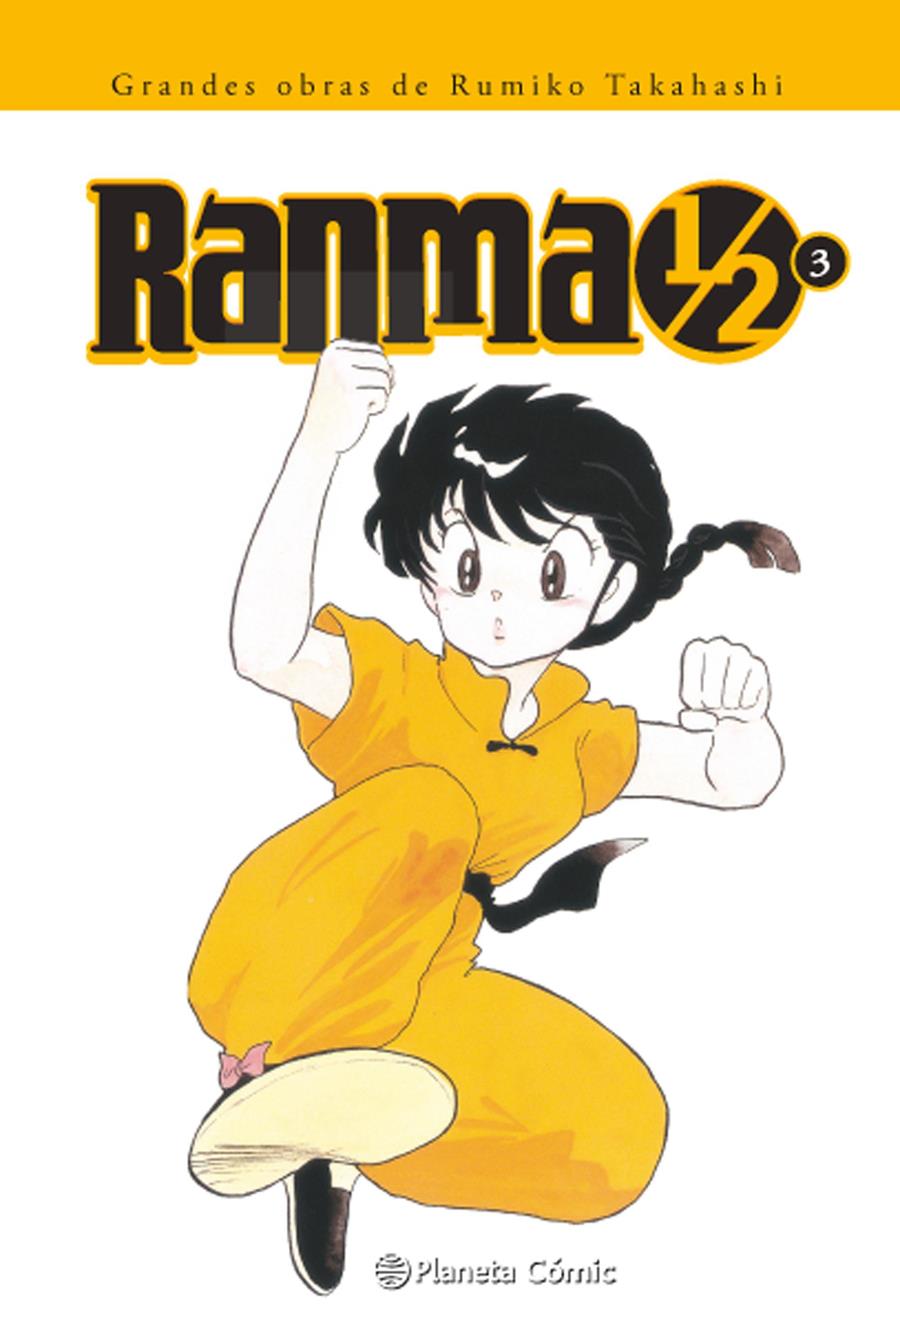 Ranma 1/2 Kanzenban nº 03/19 | N0512-EDT02 | Rumiko Takahashi | Terra de Còmic - Tu tienda de cómics online especializada en cómics, manga y merchandising